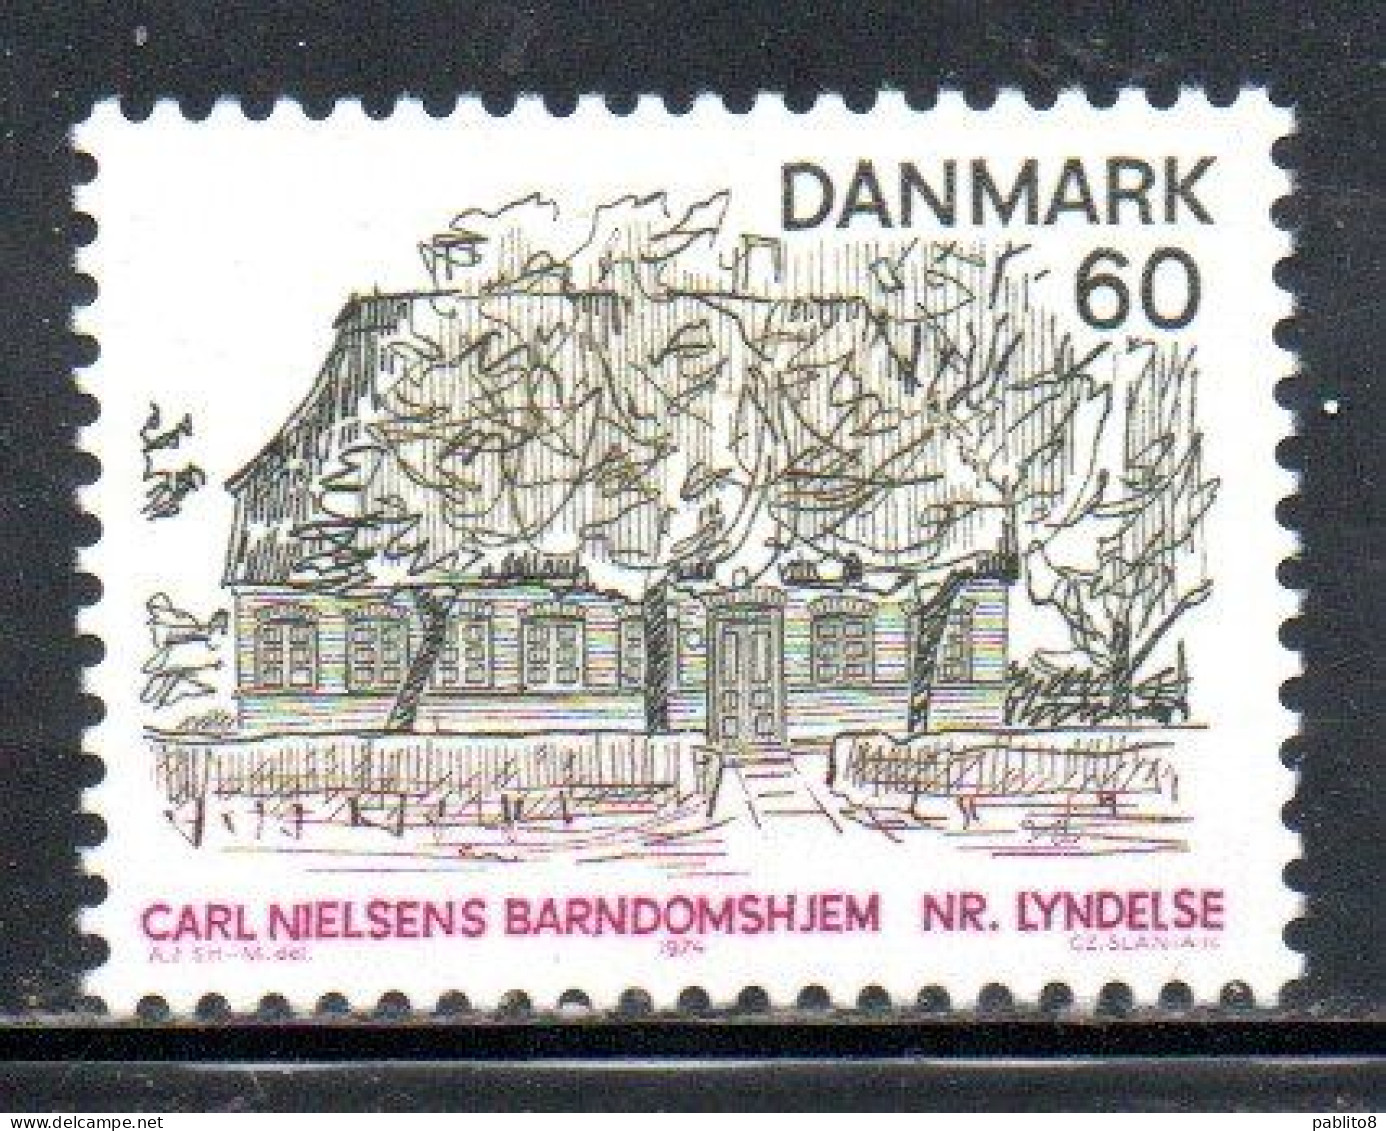 DANEMARK DANMARK DENMARK DANIMARCA 1974 VIEWS NORRE LYNDELSE CARL NIELSEN'S CHILDHOOD HOME 60o MNH - Ungebraucht